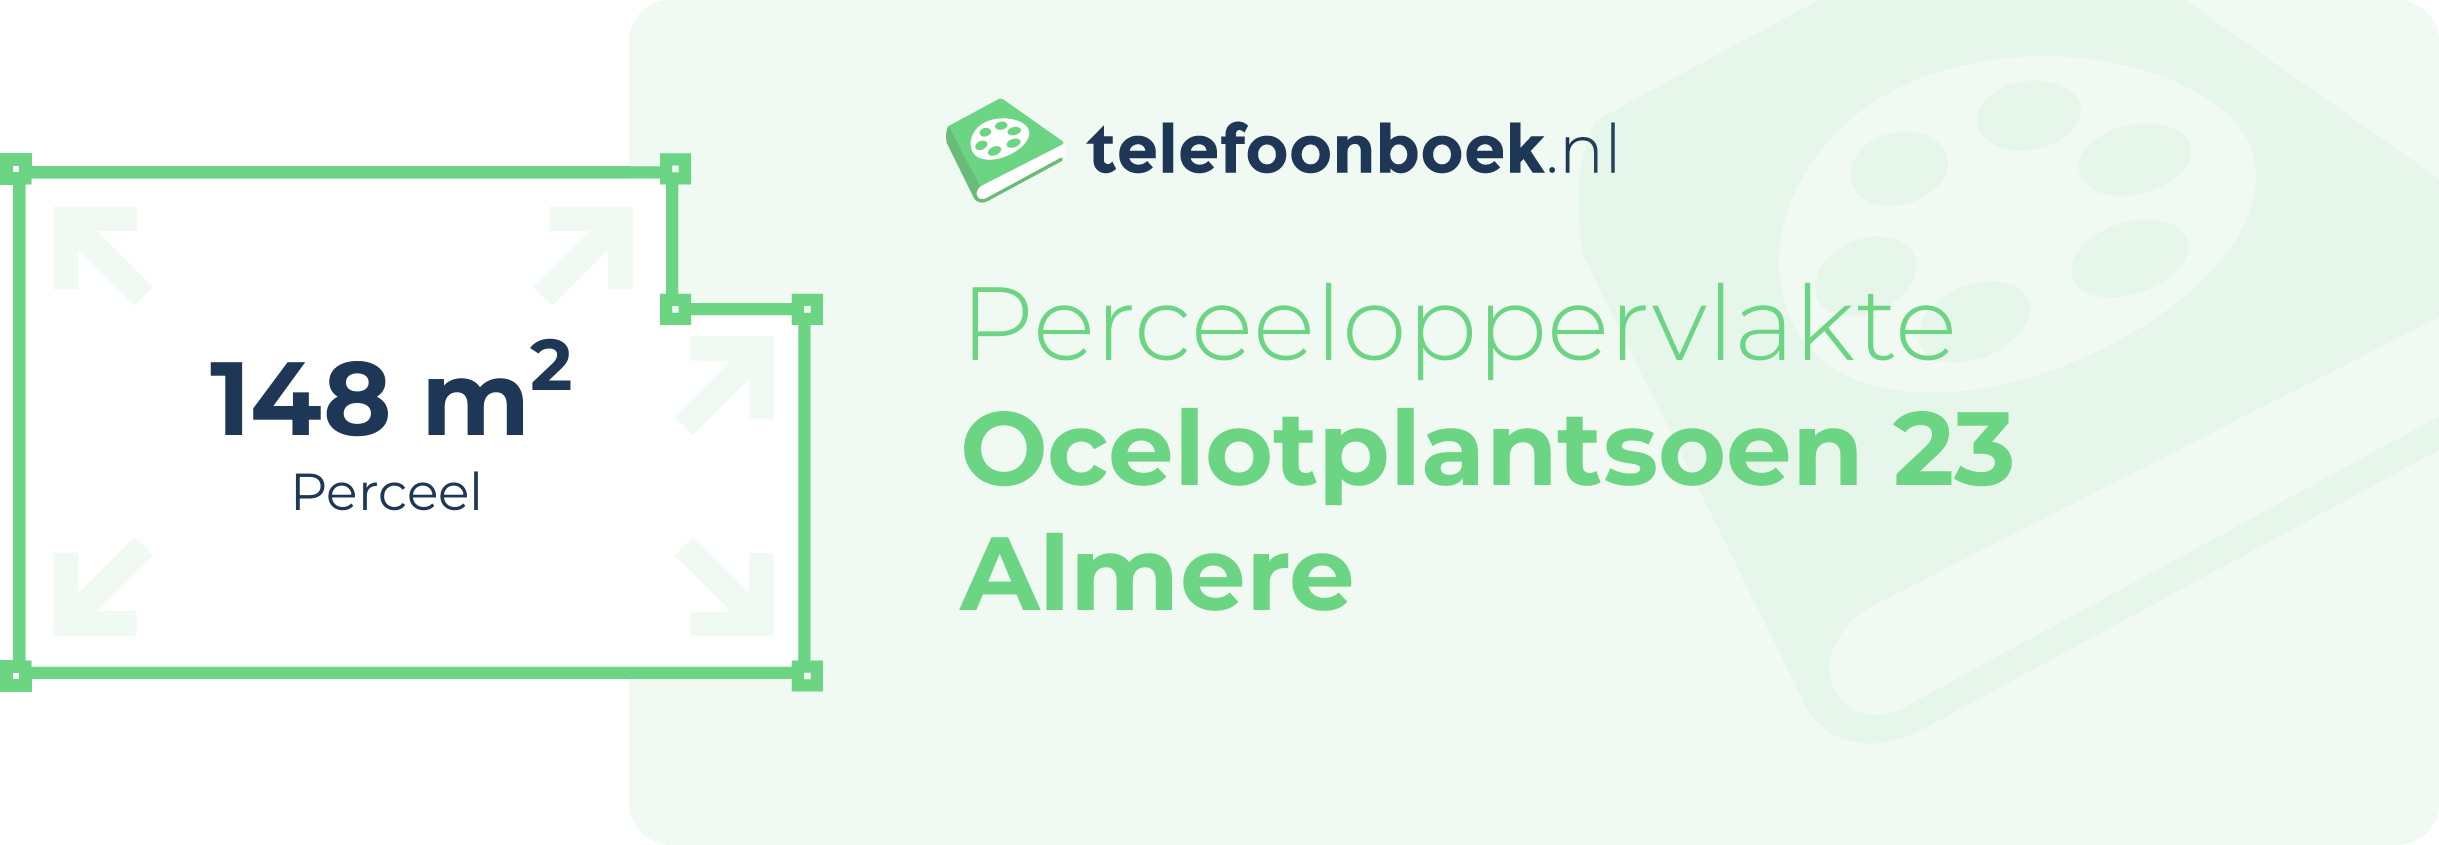 Perceeloppervlakte Ocelotplantsoen 23 Almere